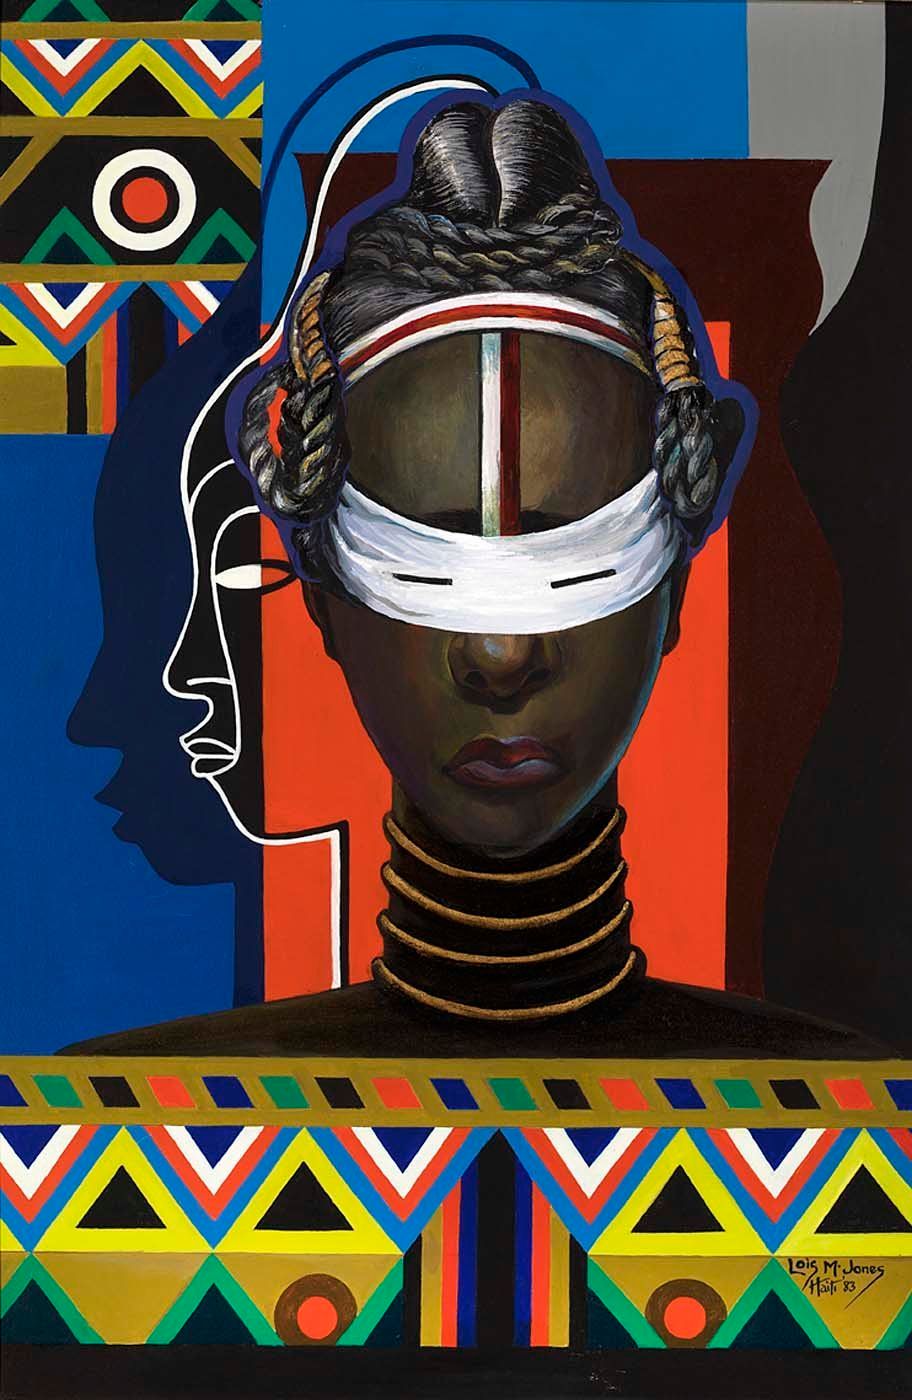 Loïs Mailou Jones, "Initiation, Liberia," 1983, acrylic on canvas, 35 1/4 x 23 1/4 in. (89.6 x 59.1 cm)